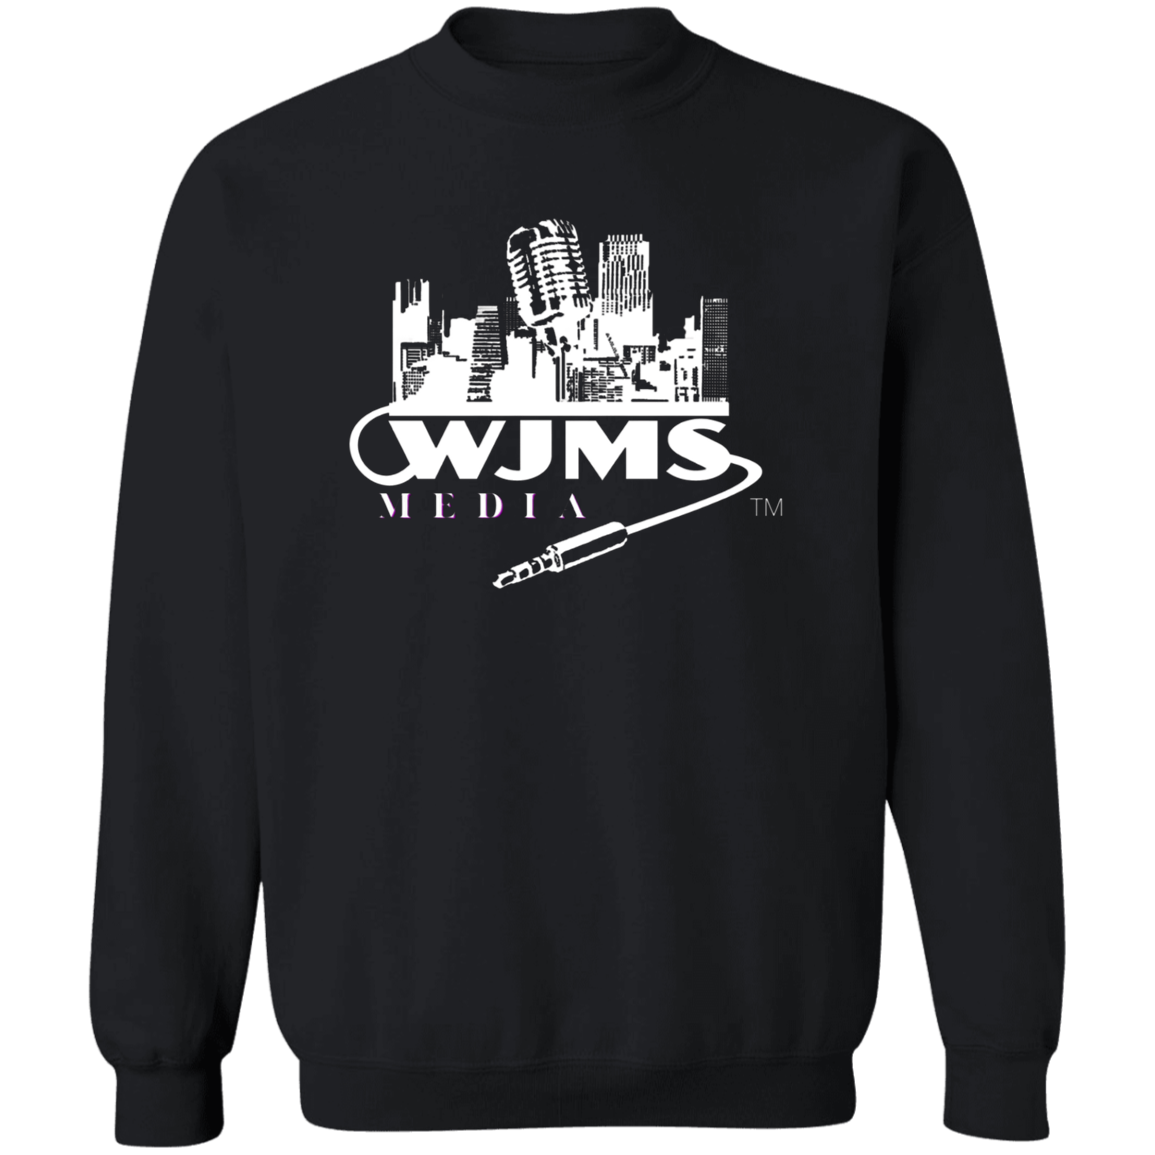 WJMS Pullover Crewneck Sweatshirt 8 oz (Closeout)